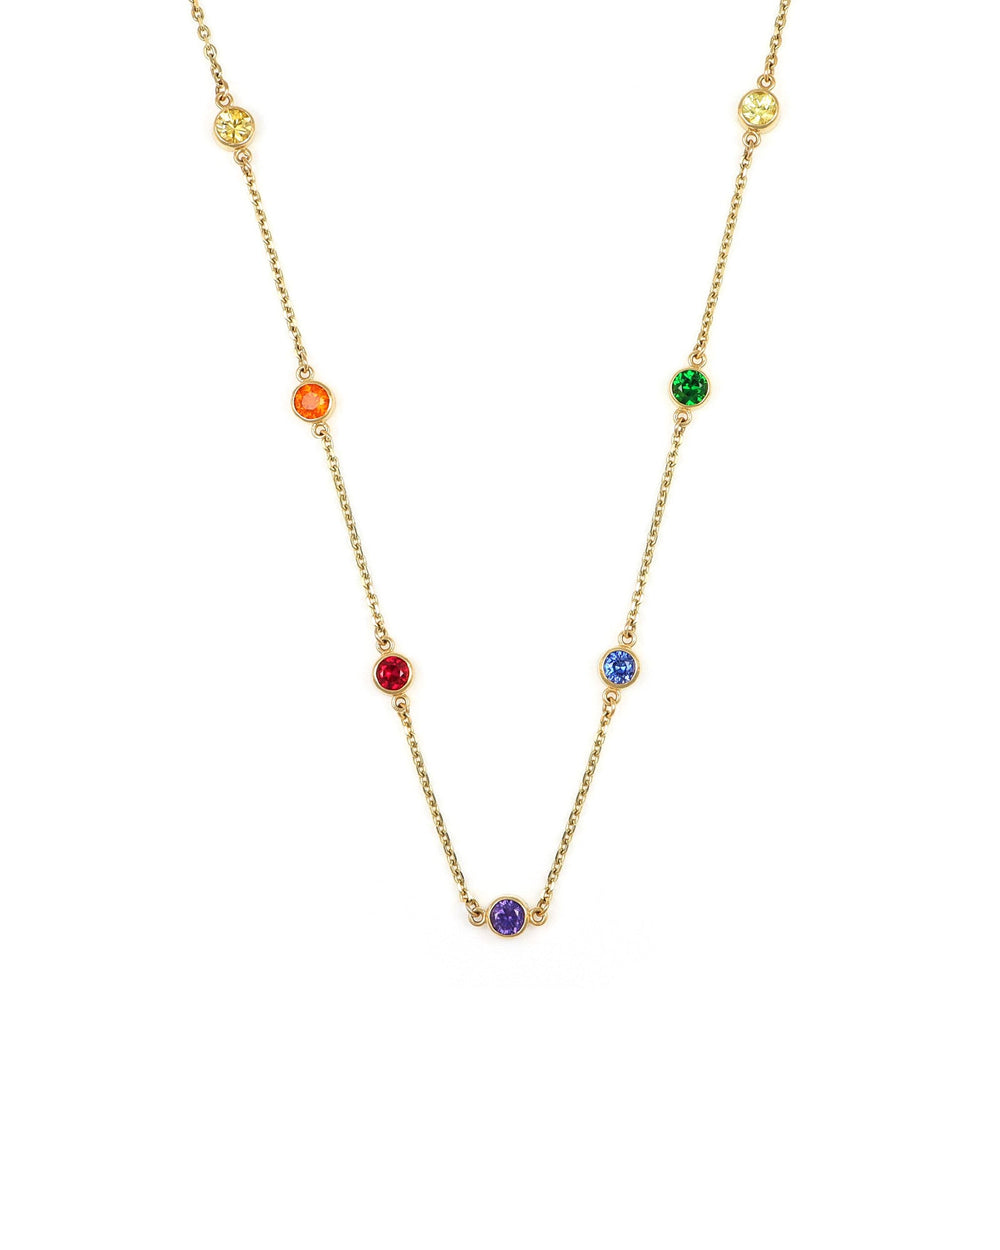 Rainbow Station necklace